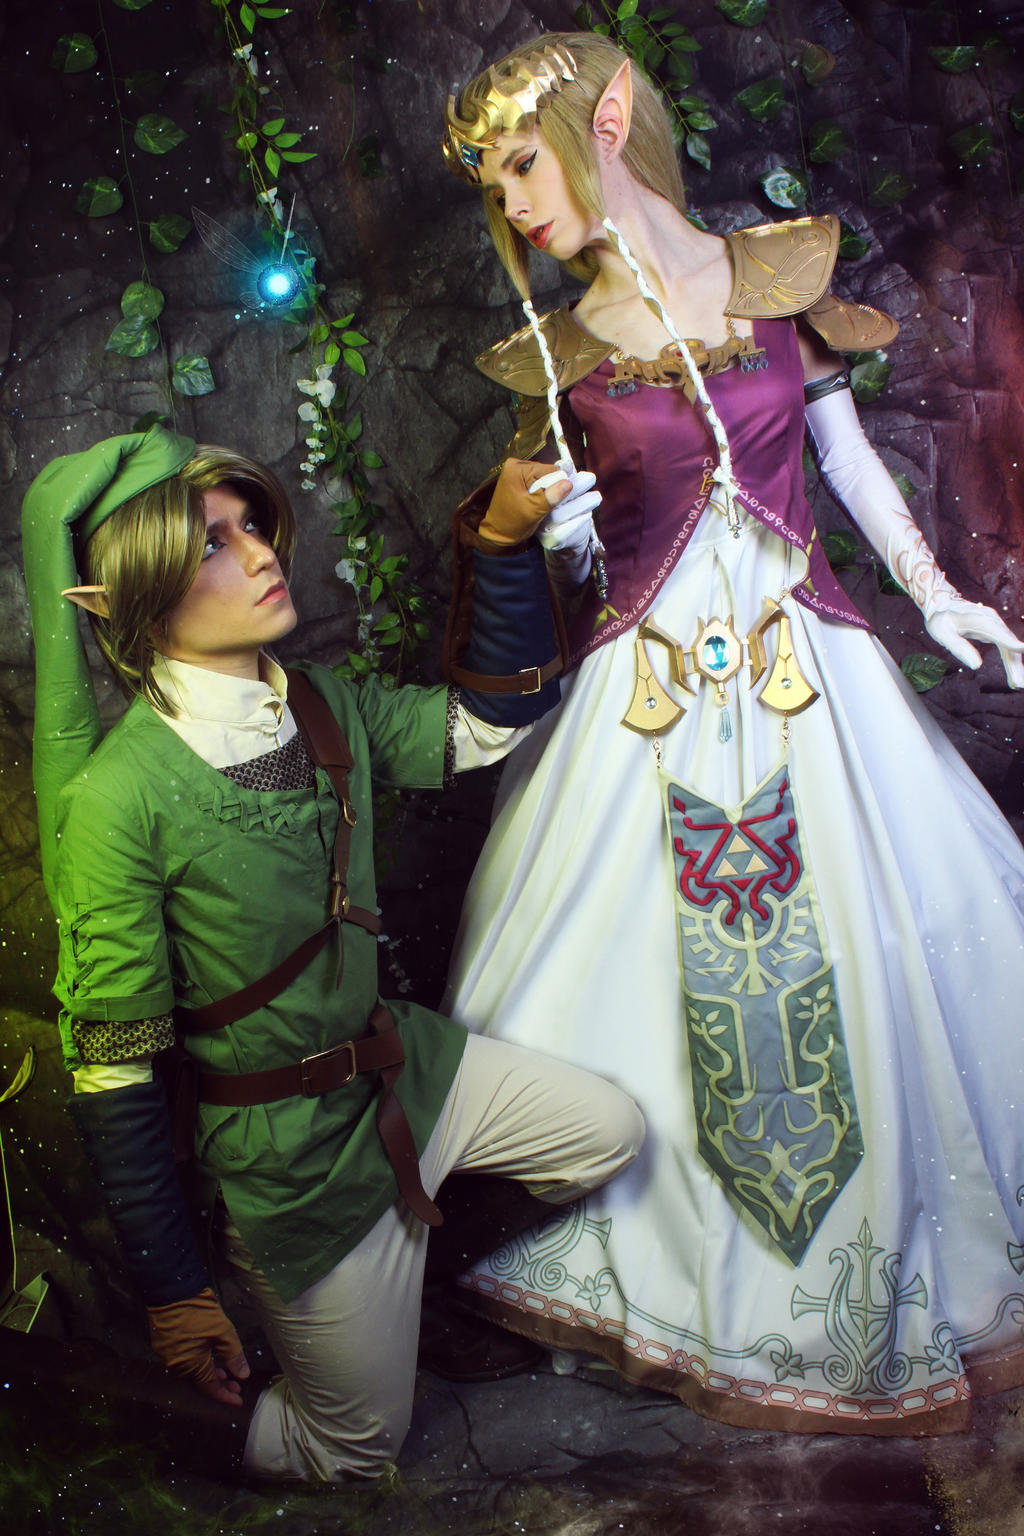 Link from The Legend of Zelda: Twilight Princess by LiKovacs on deviantART